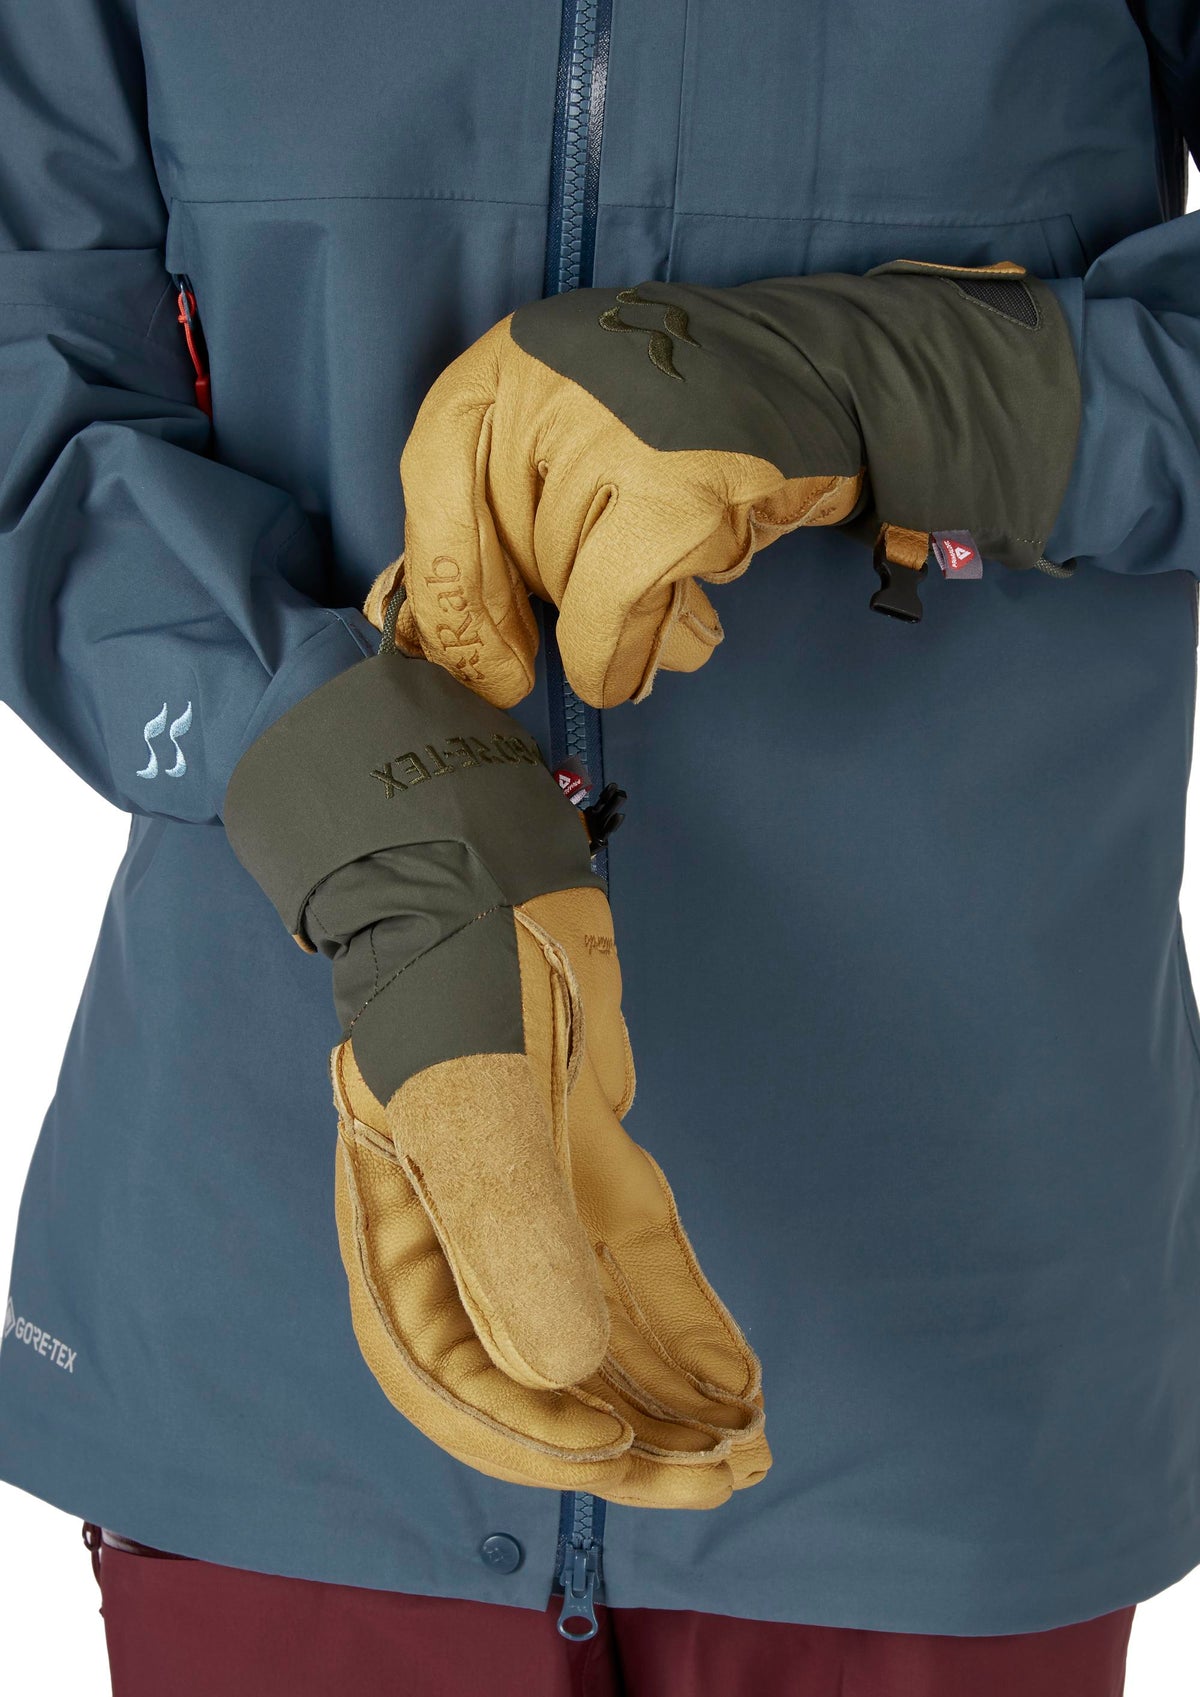 Rab Khroma Tour GTX Gloves